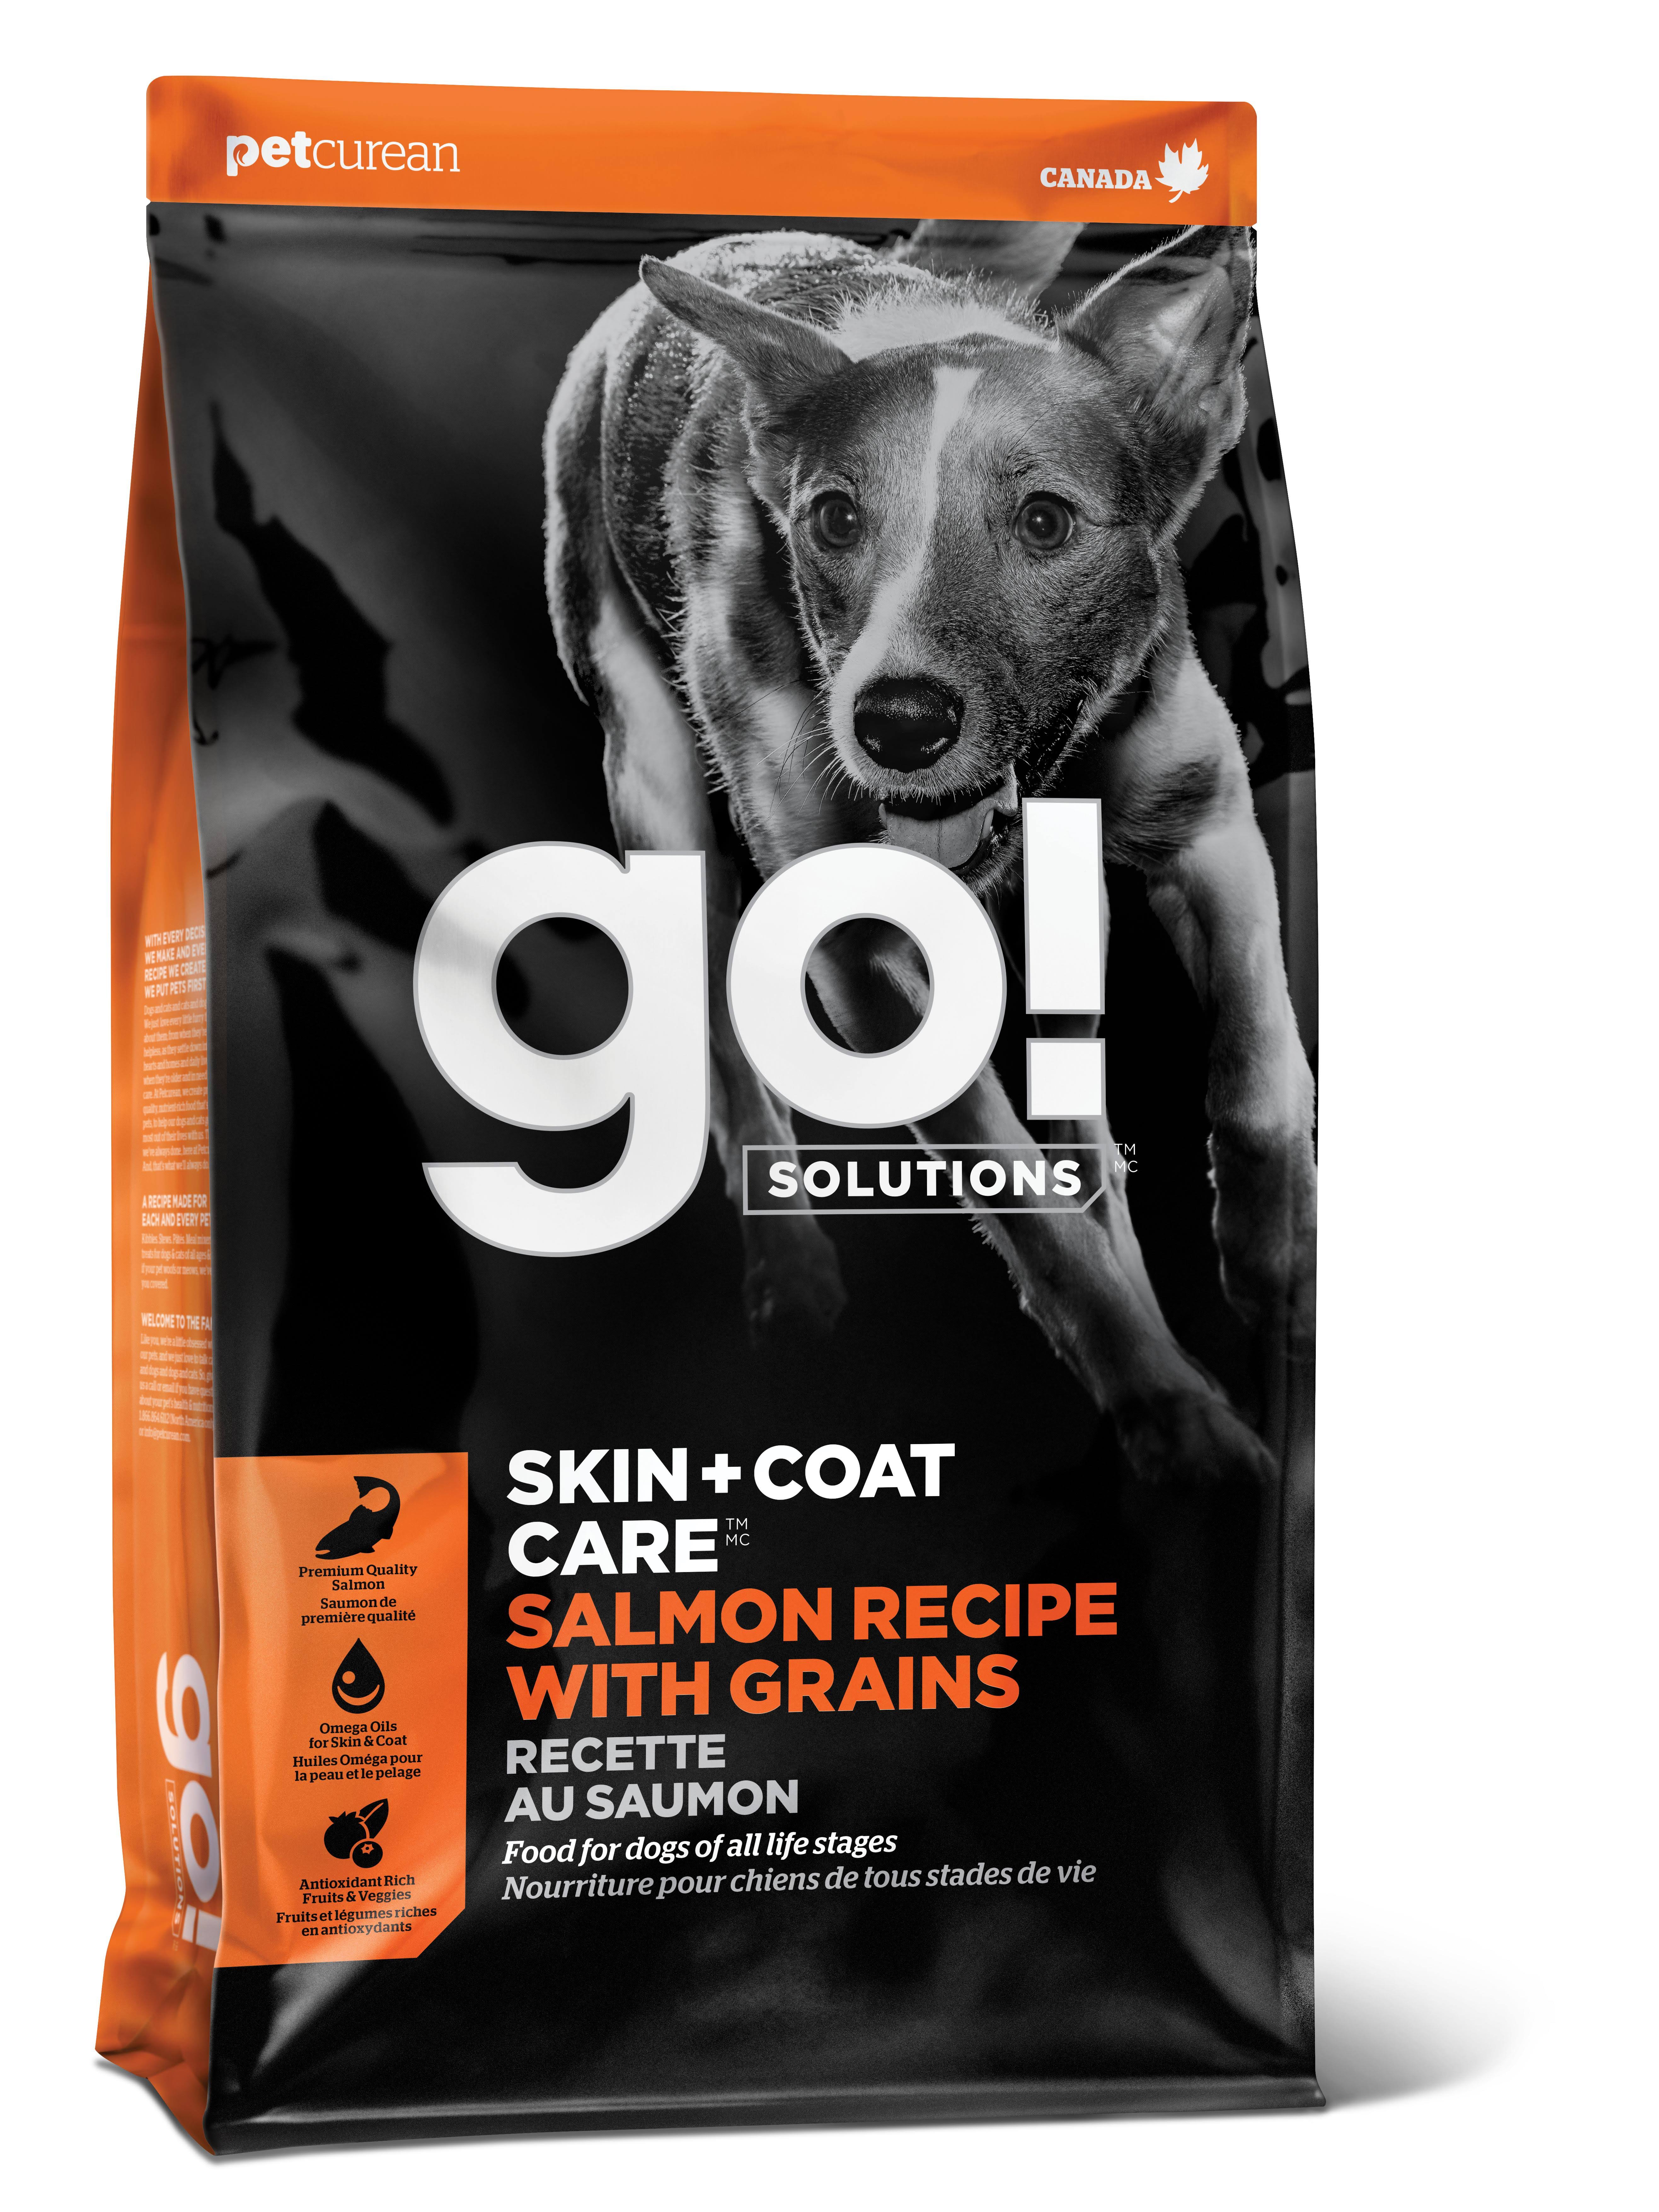 Go! Solutions Skin + Coat Care Salmon Dog Food 12lbs